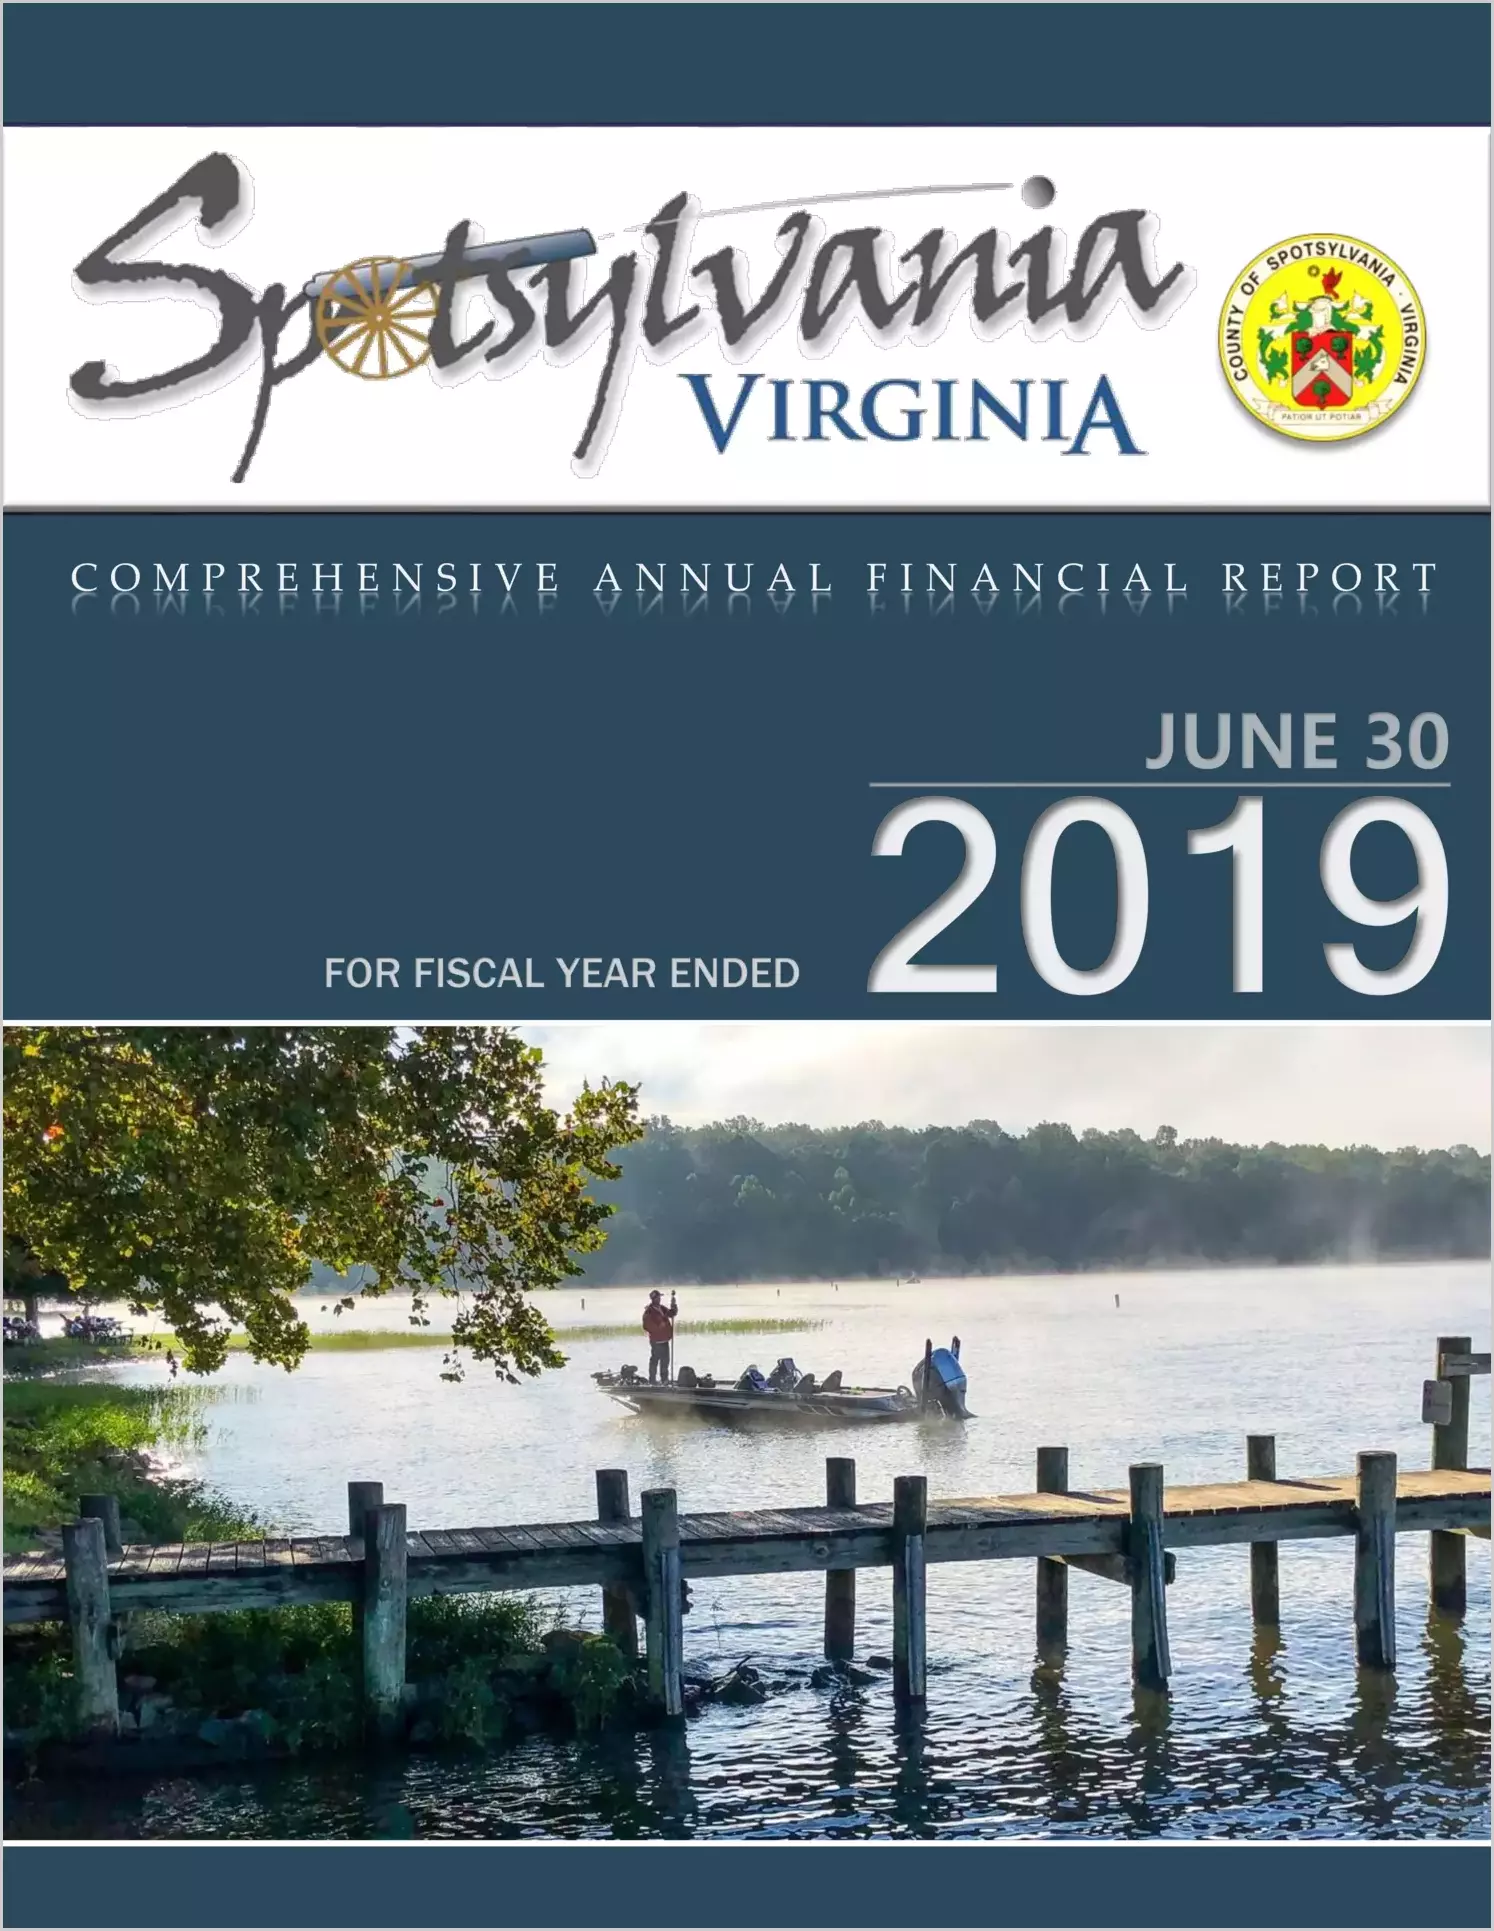 2019 Annual Financial Report for County of Spotsylvania